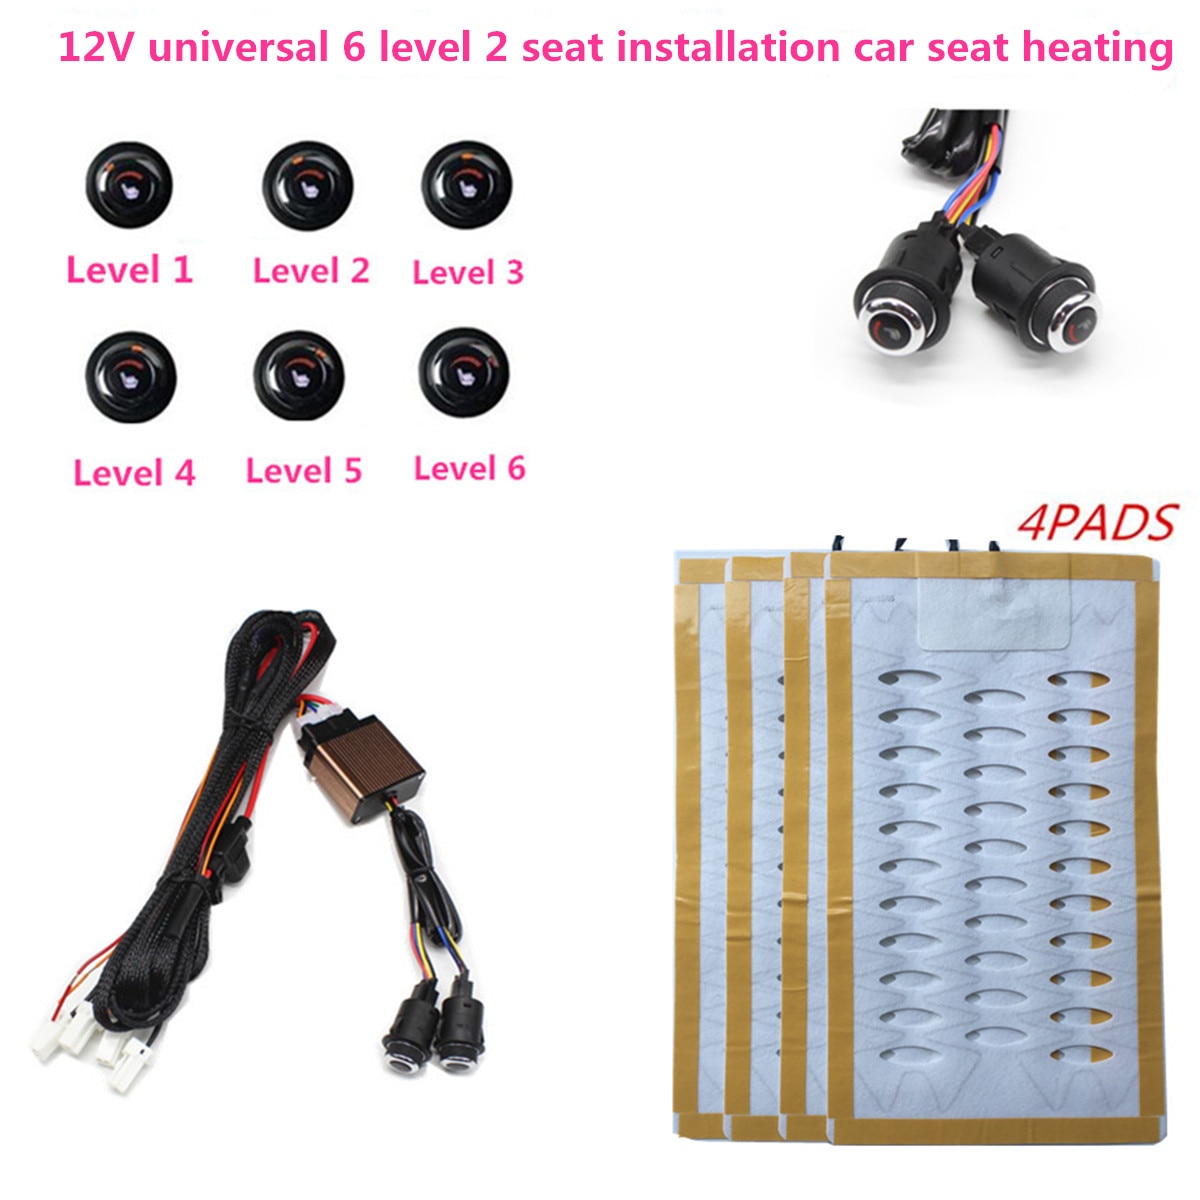 12V Legering Draad Stoelverwarming Voor Auto Suv Heater Pads + 6 Positie Rotary Switch Knop Interieur Bekleding heater Warmer Ondersteuning